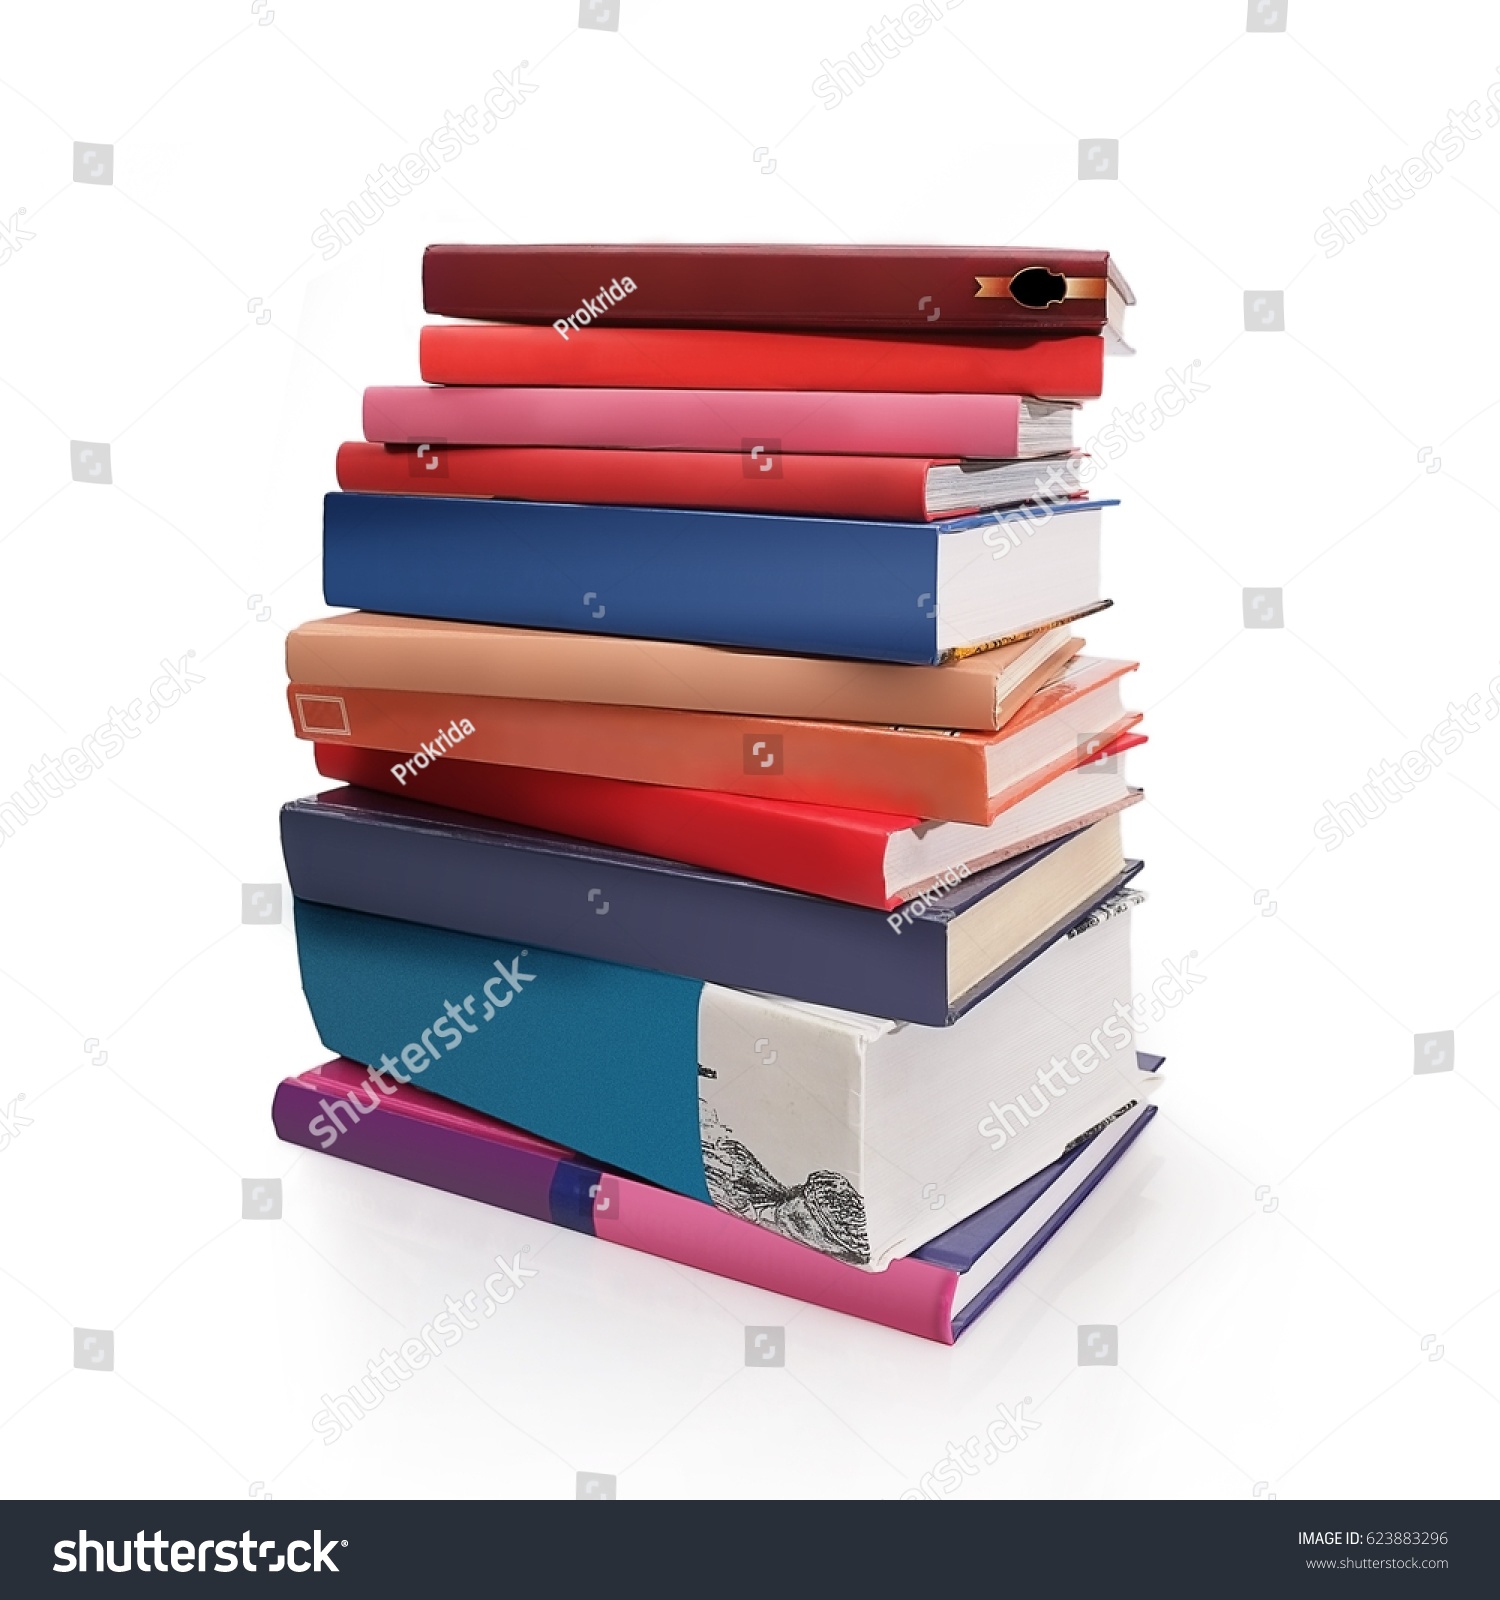 Stack Books On White Background Stock Photo 623883296 - Shutterstock